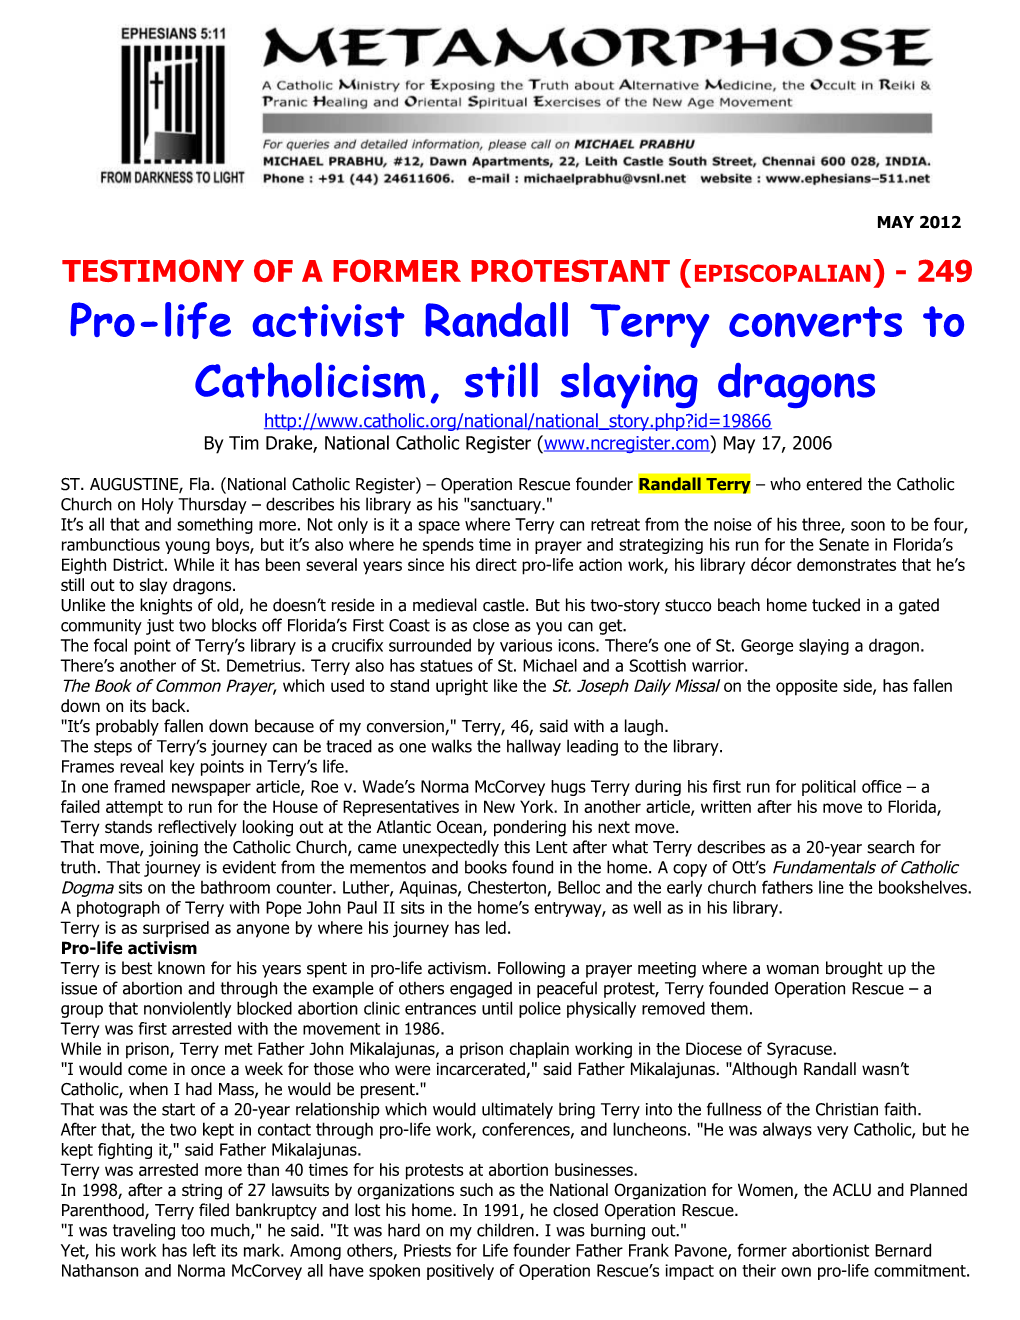 Testimony of a Former Protestant (Episcopalian) -249